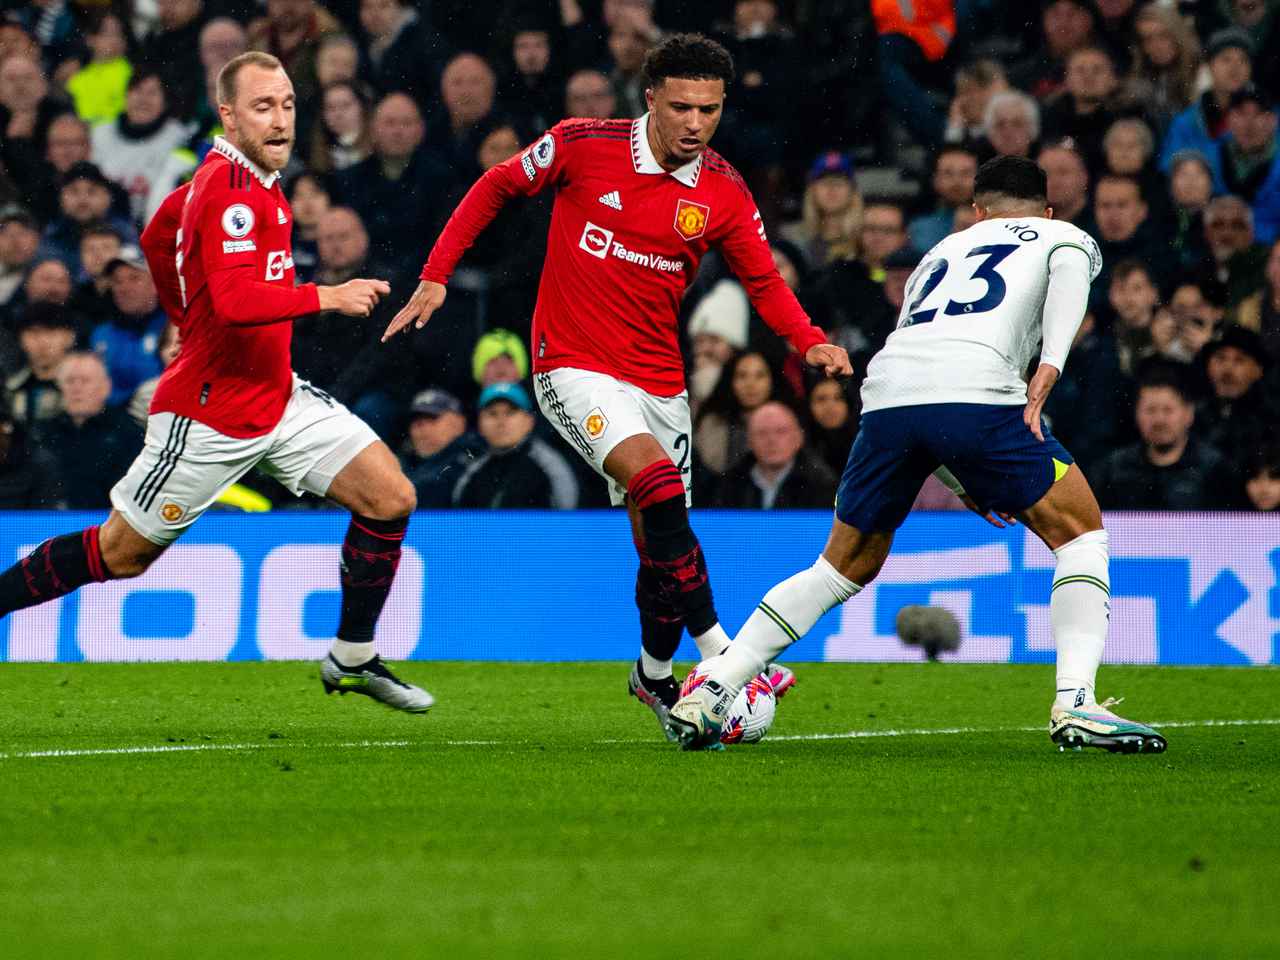 Tottenham 2-0 Manchester United - Ange Postecoglou enjoys first